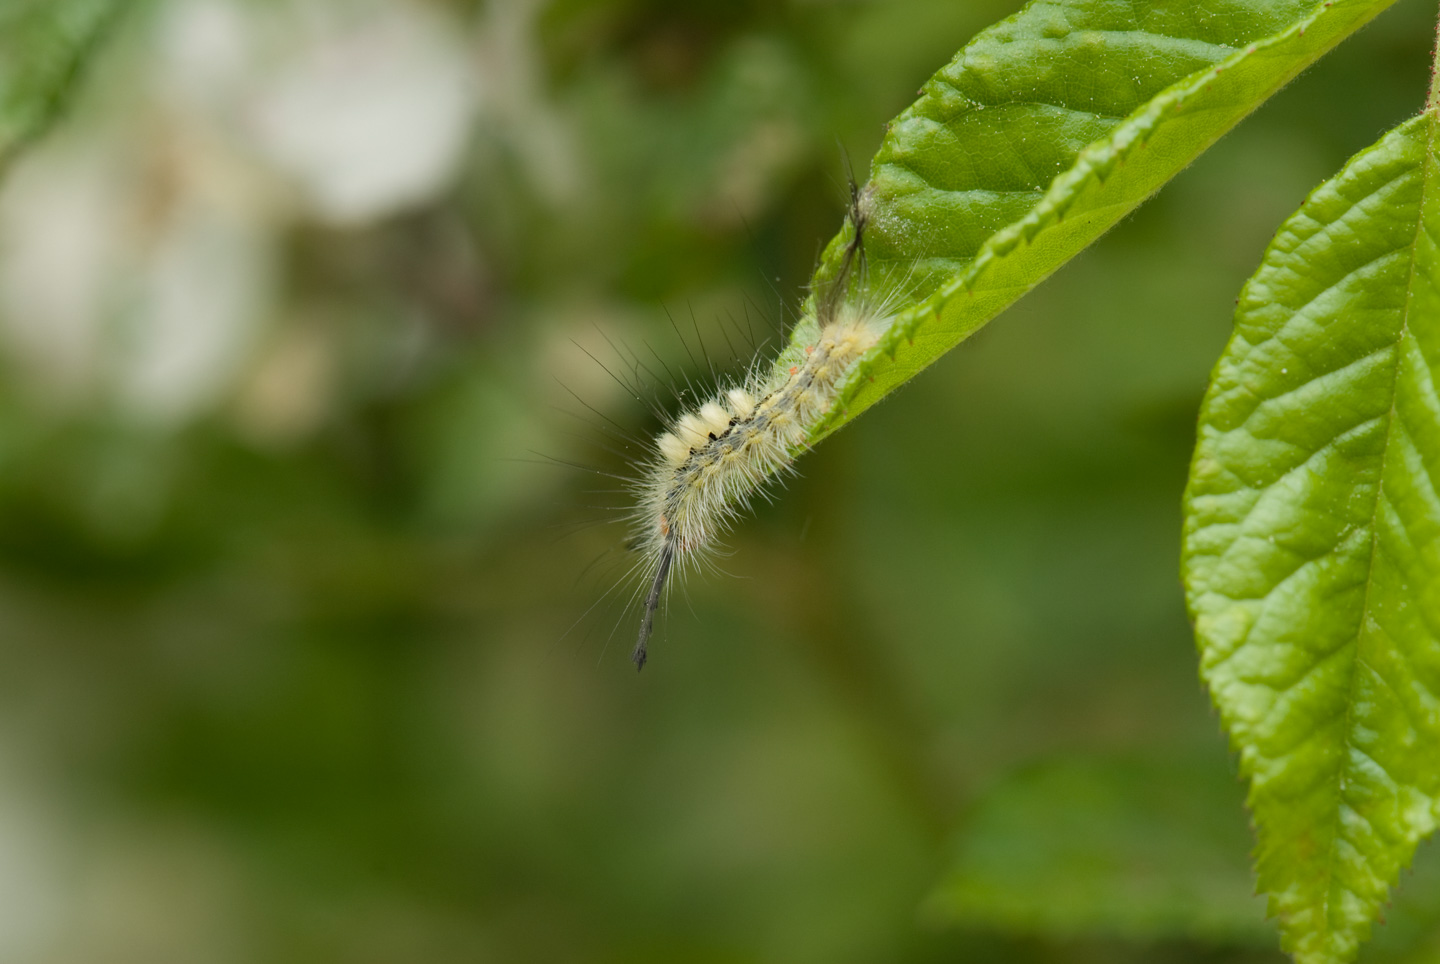 interesting looking caterpillar